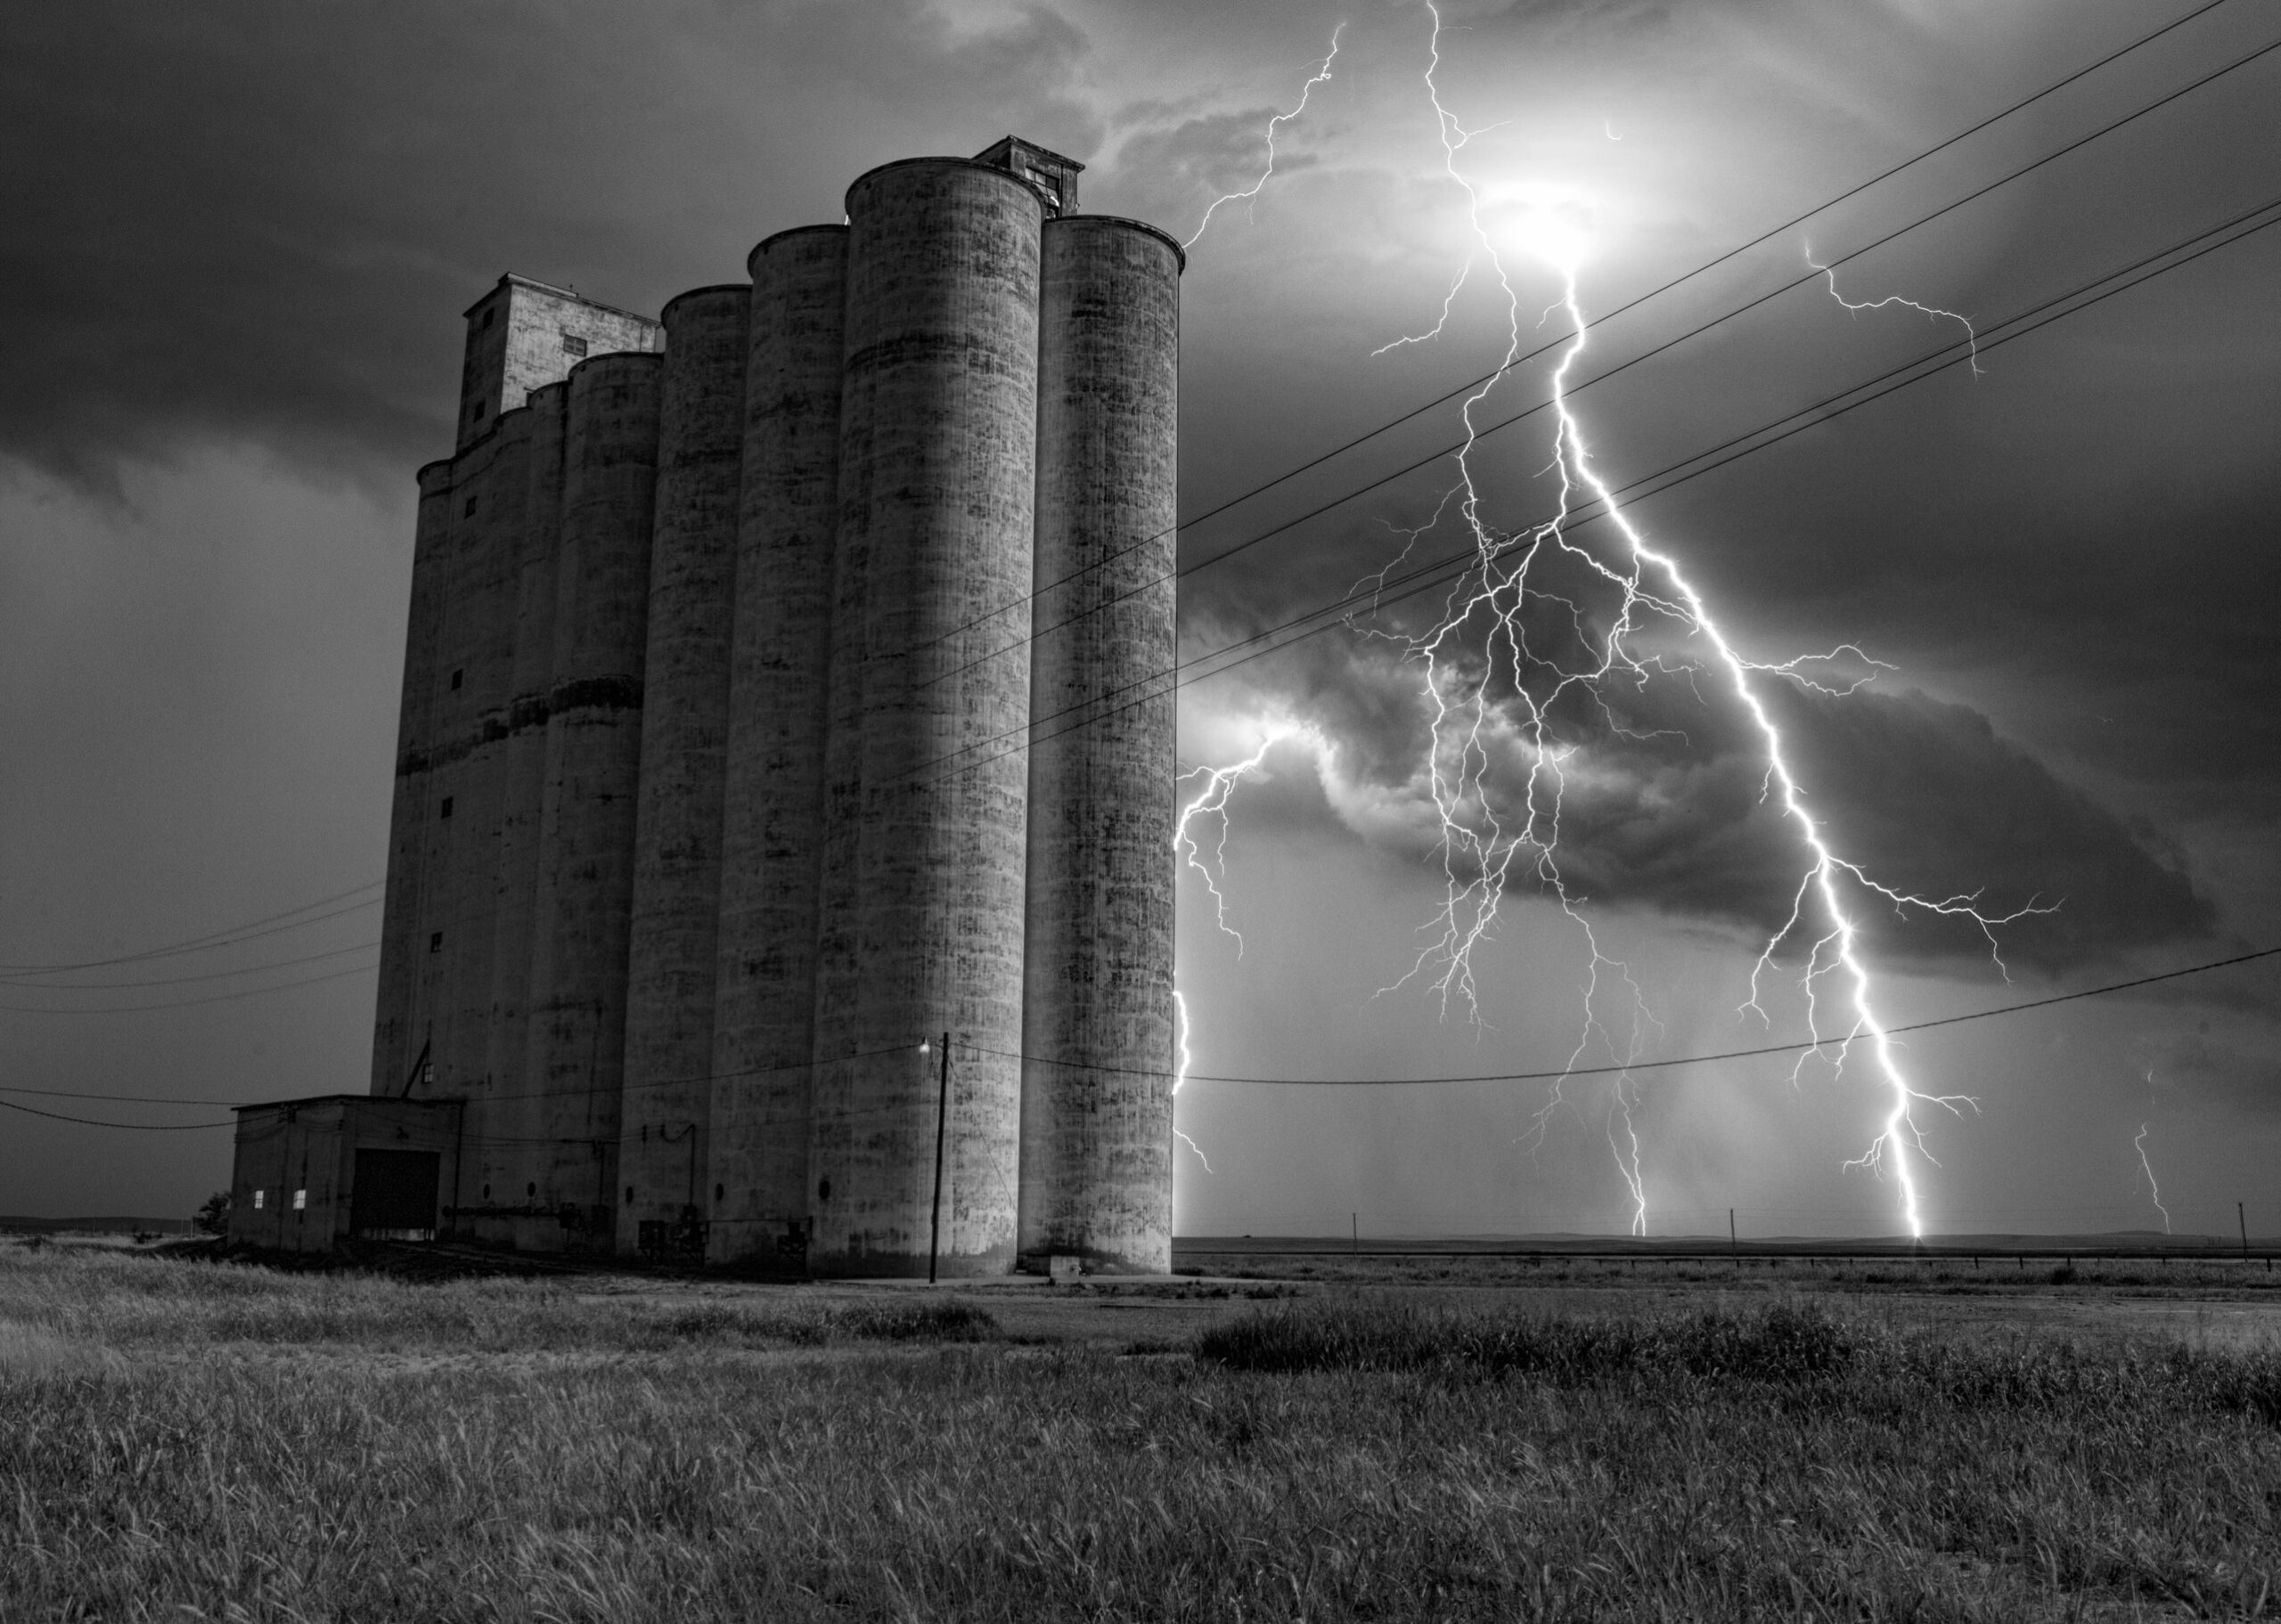 Multiple bolts of staccato lightning strike near the Sitka Elevator in Sitka Kansas